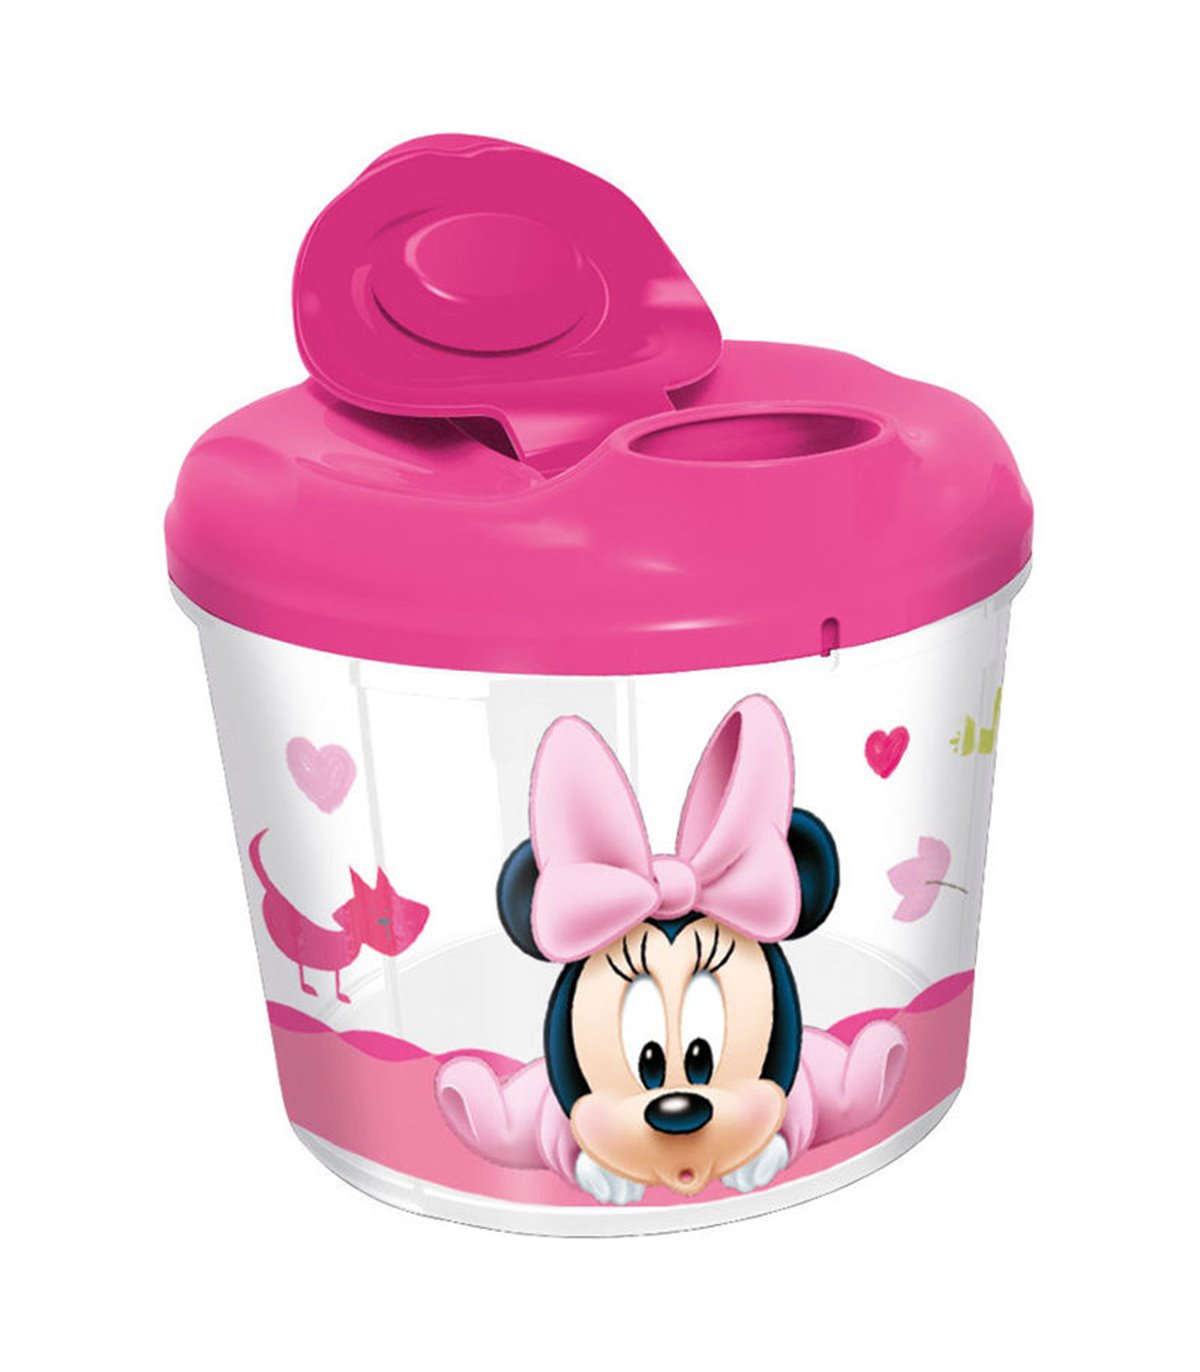 Saga pasajero músico Dispensador leche en polvo Minnie Disney baby